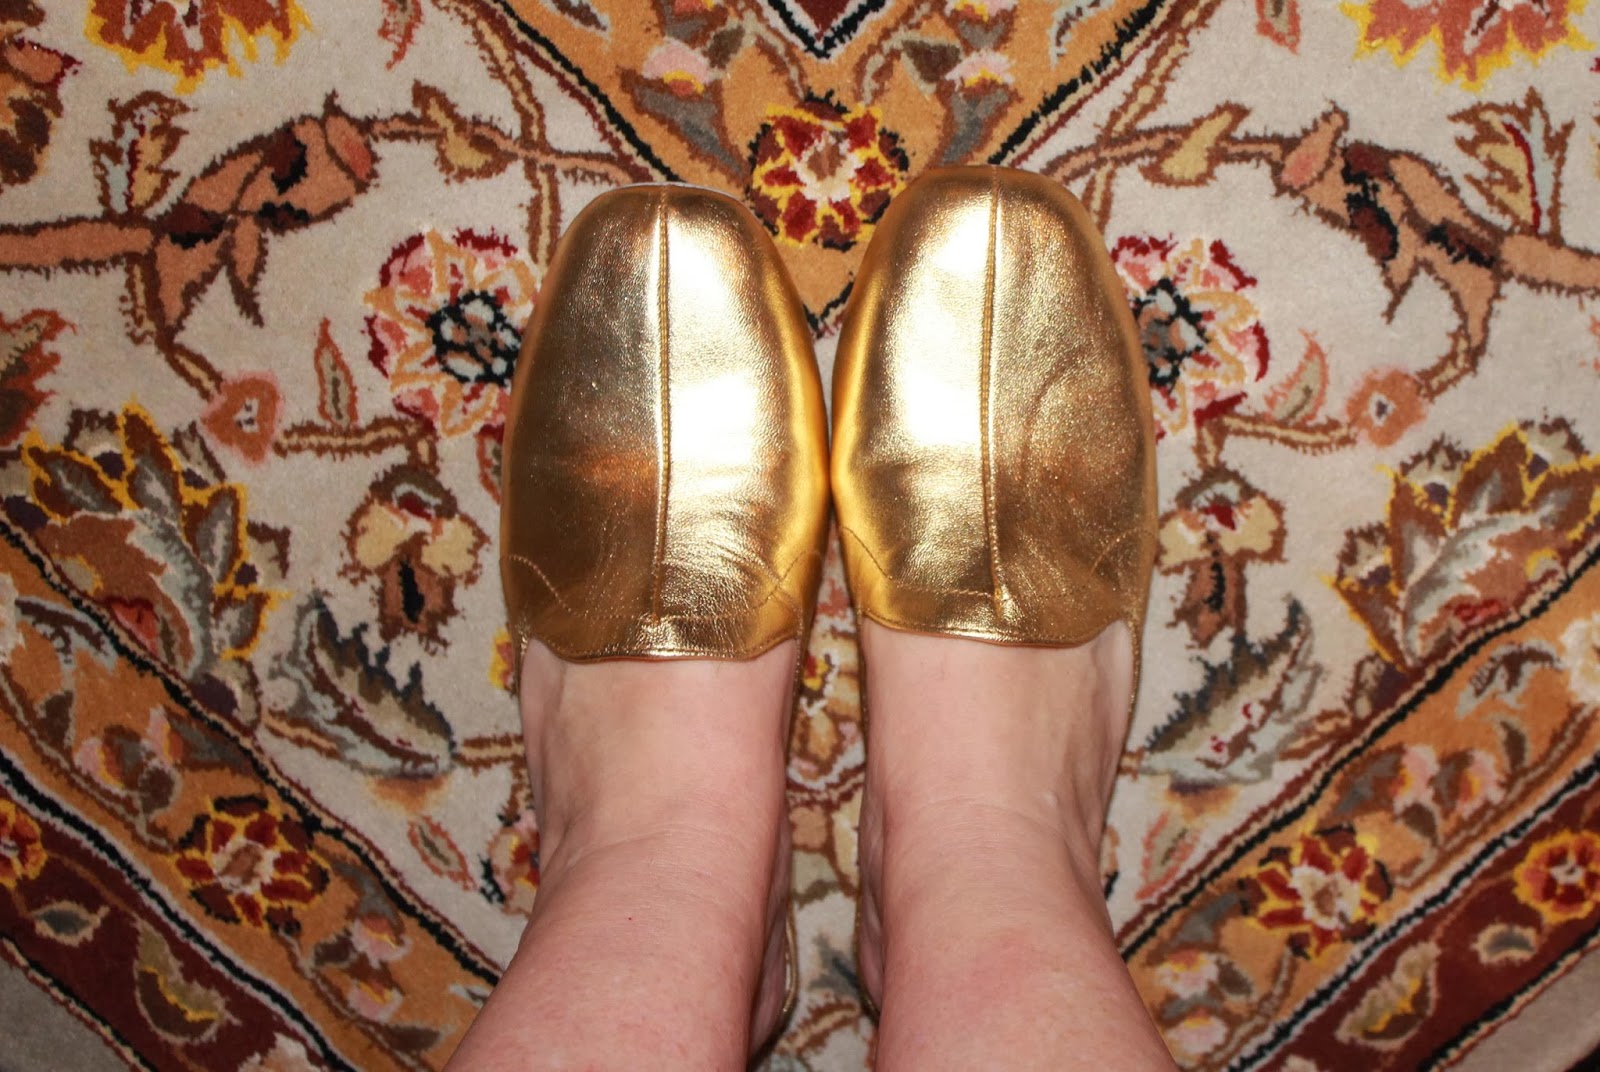 glamorous slippers